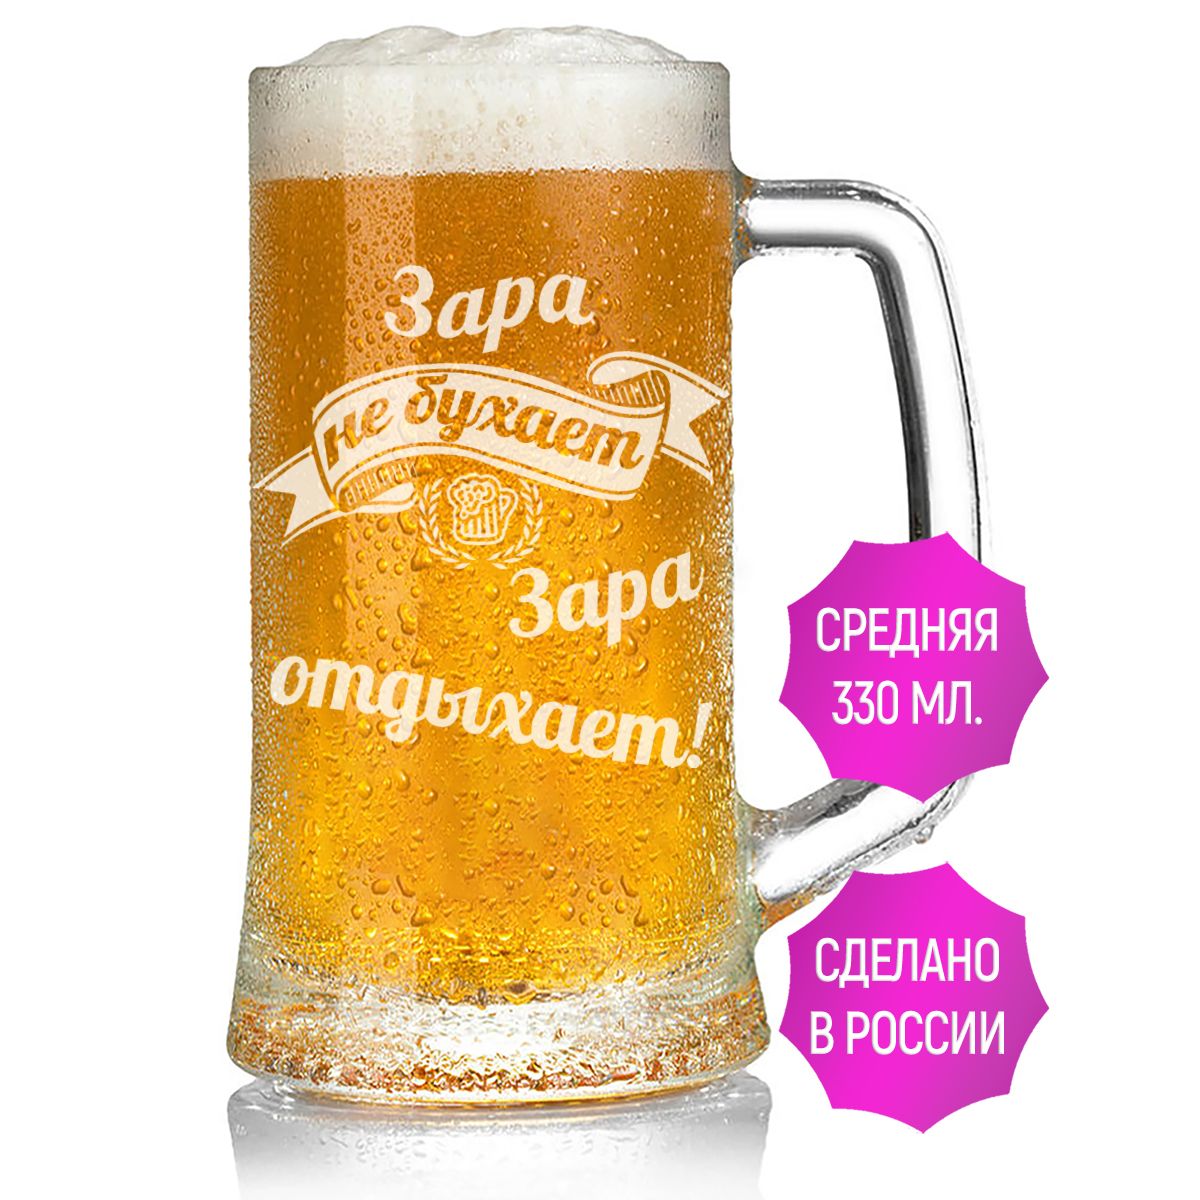 Кружка для пива AV Podarki  Зара не бухает Зара отдыхает 330 мл.